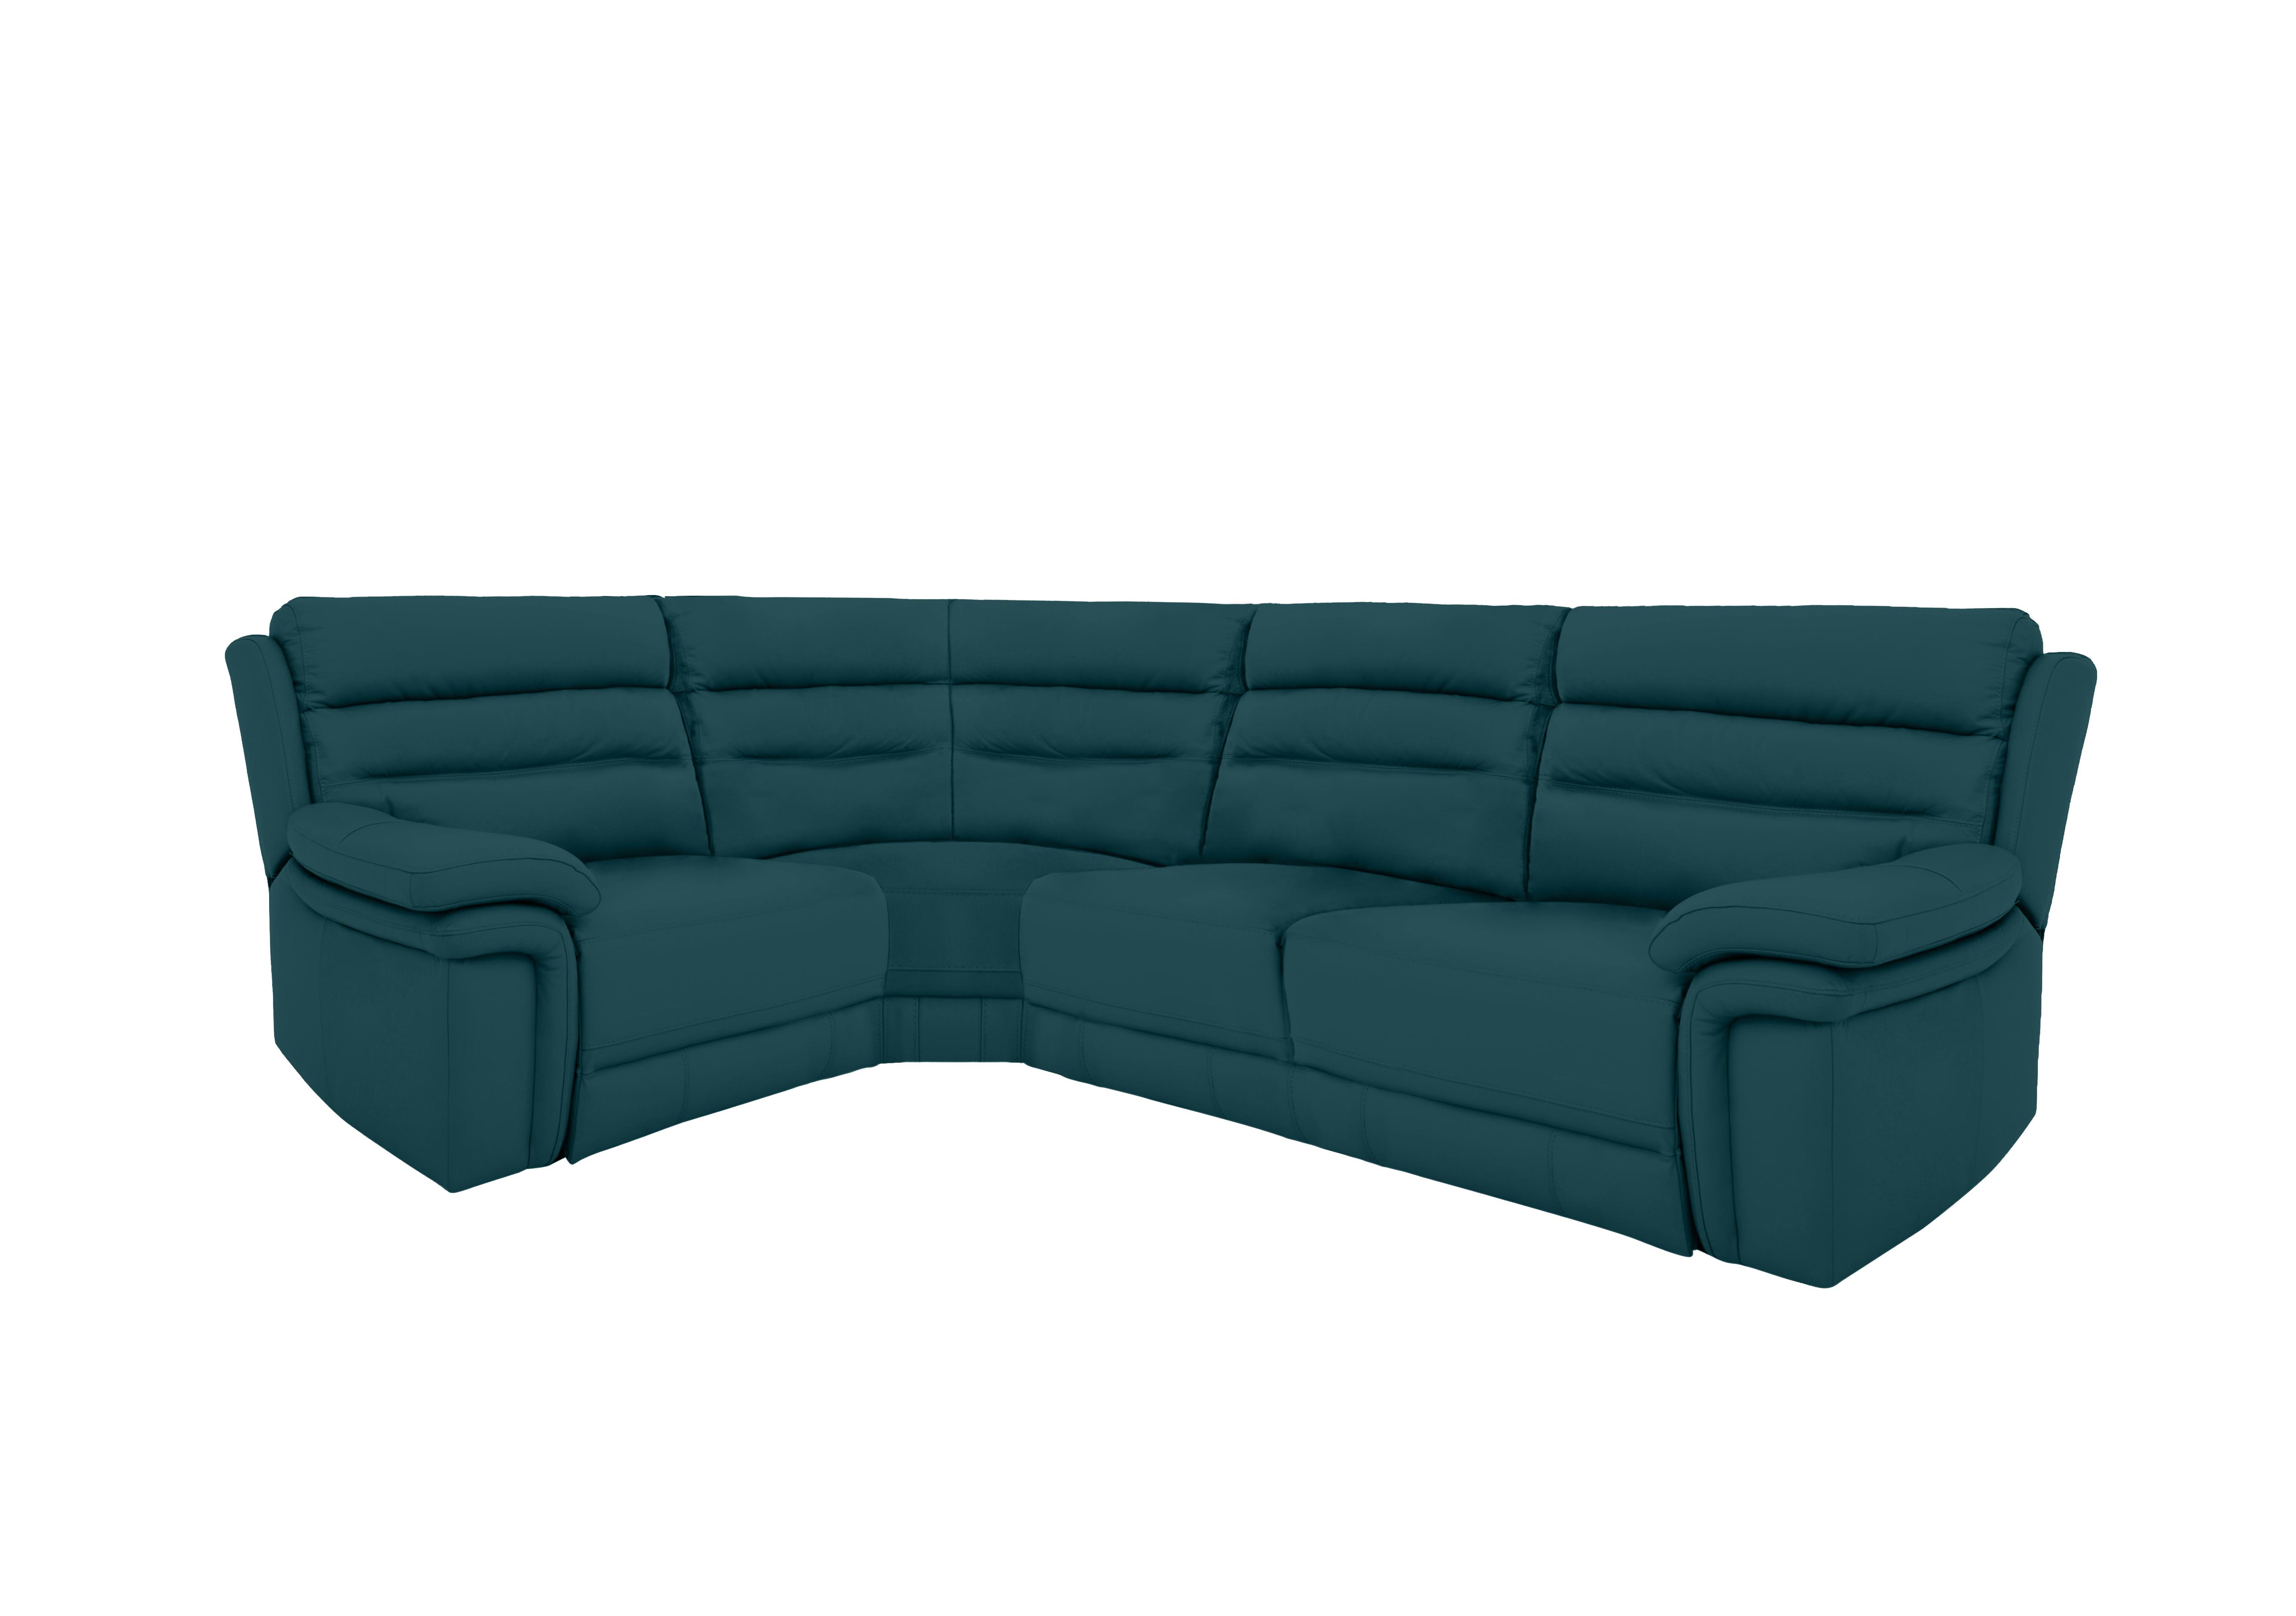 Berlin Modular Leather Corner Sofa in Midnight Jade Le-9314 on Furniture Village